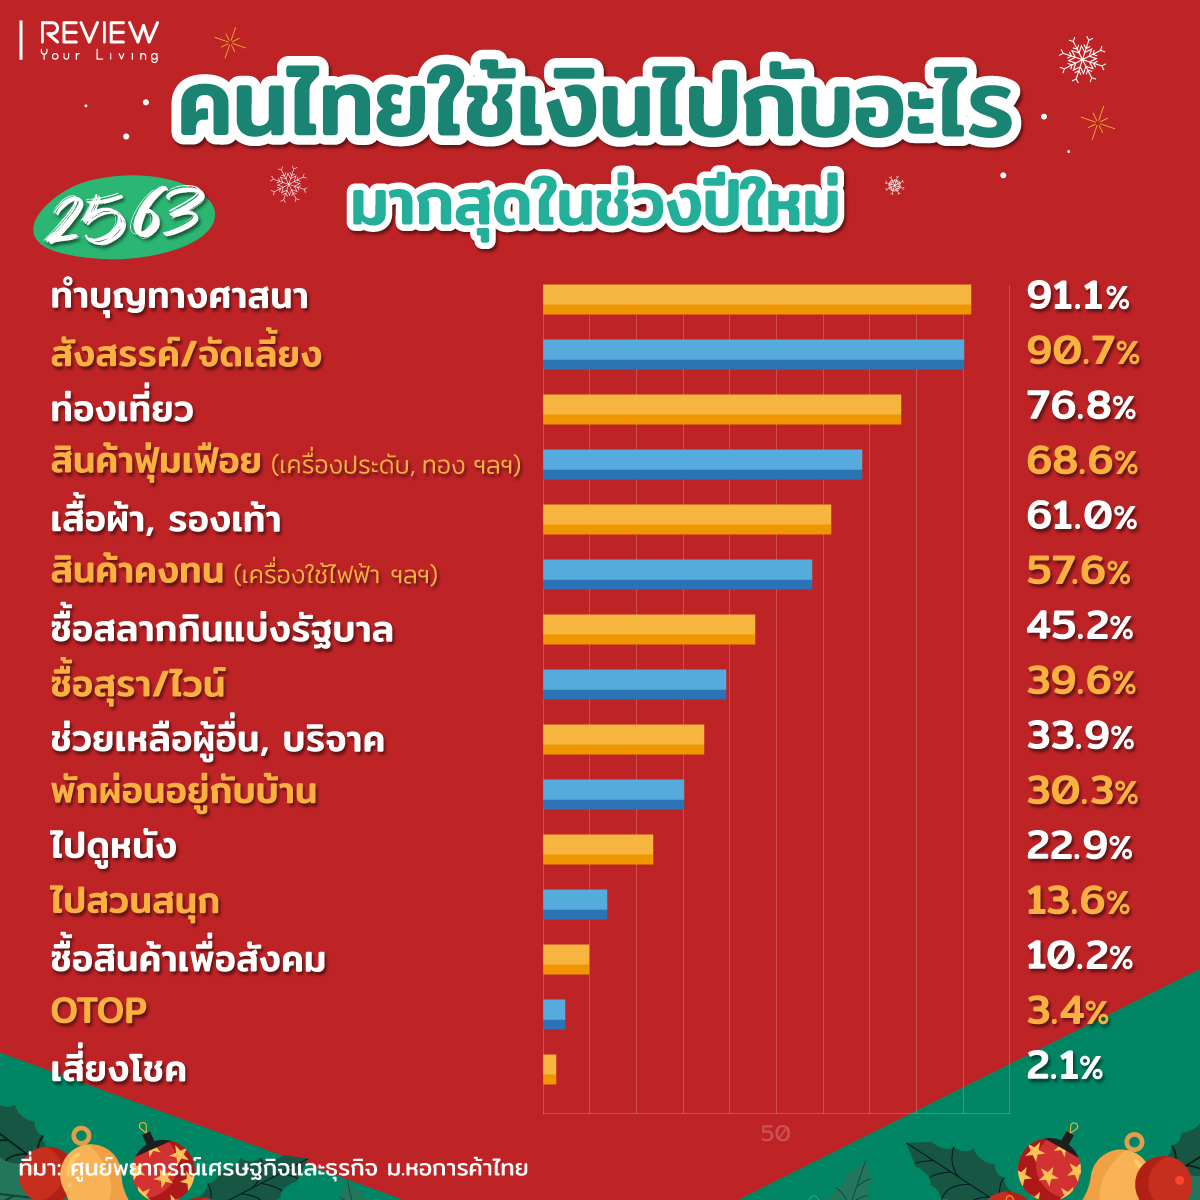 Thai Consumer Spending New Year 2563